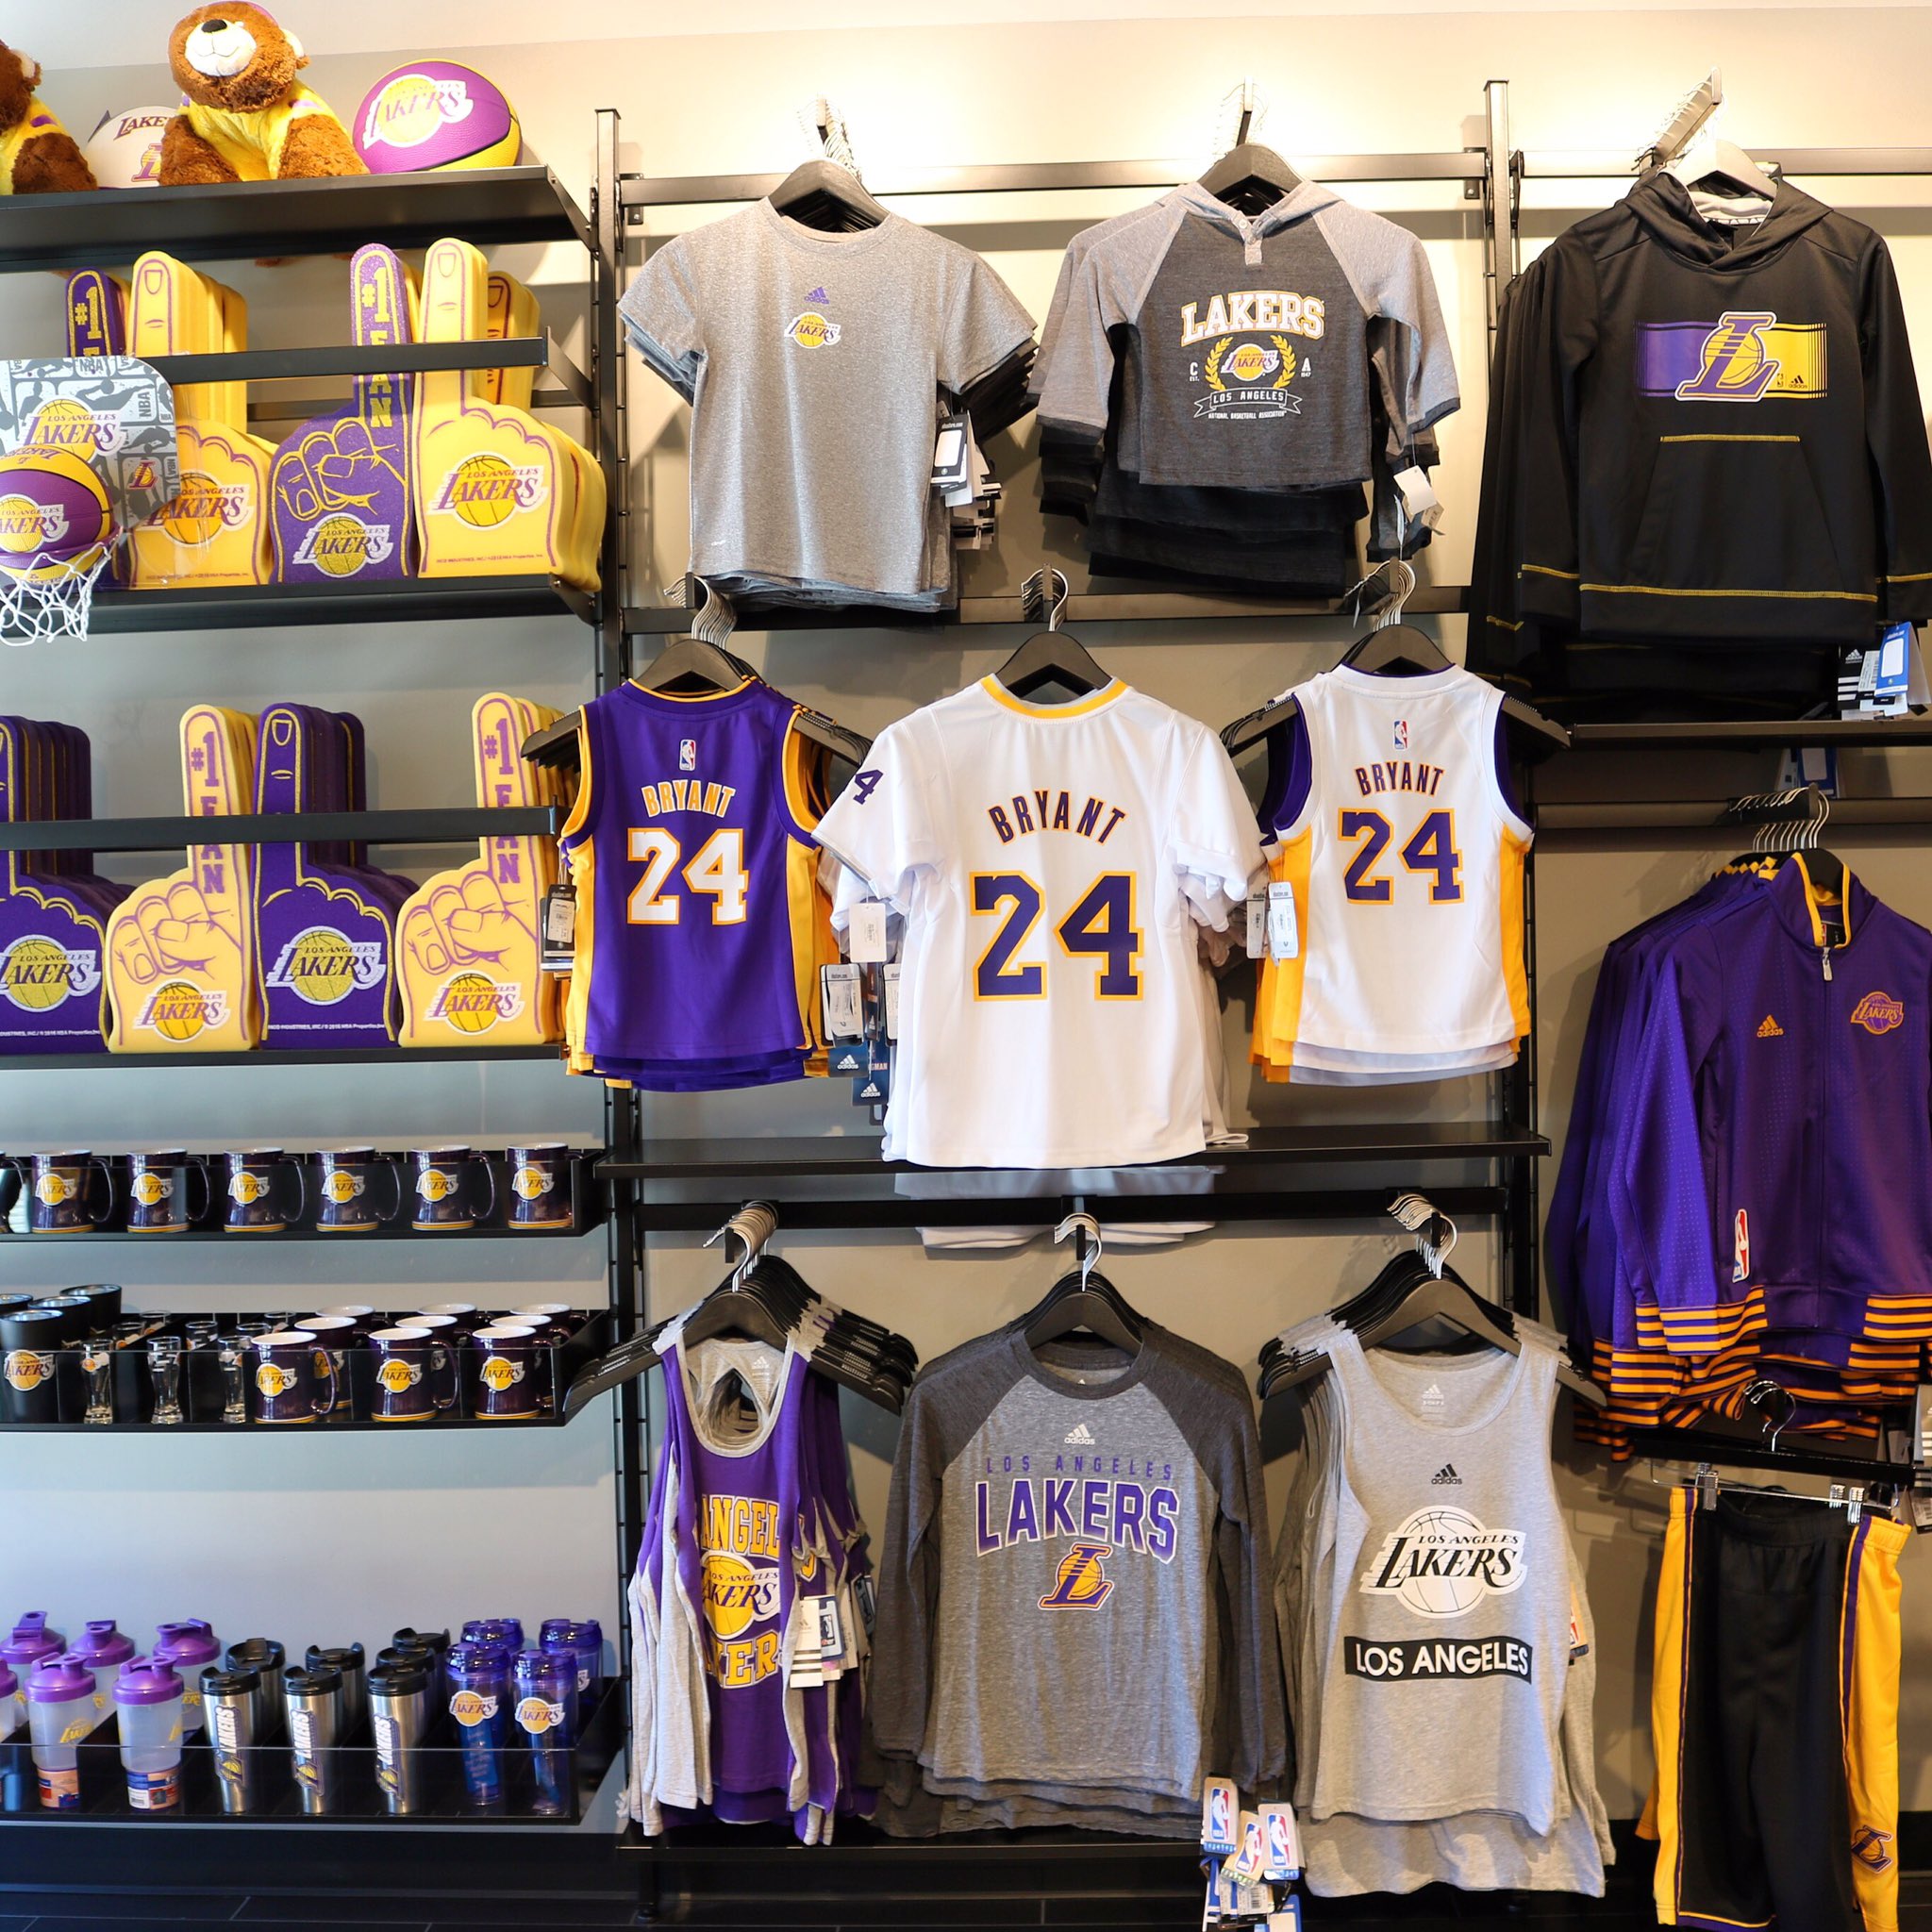 X shop магазин. Los Angeles Lakers мерч. Лос Анджелес Лейкерс мерч. Магазин Lakers в los Angeles. Лос-Анджелес Лейкерс магазины.